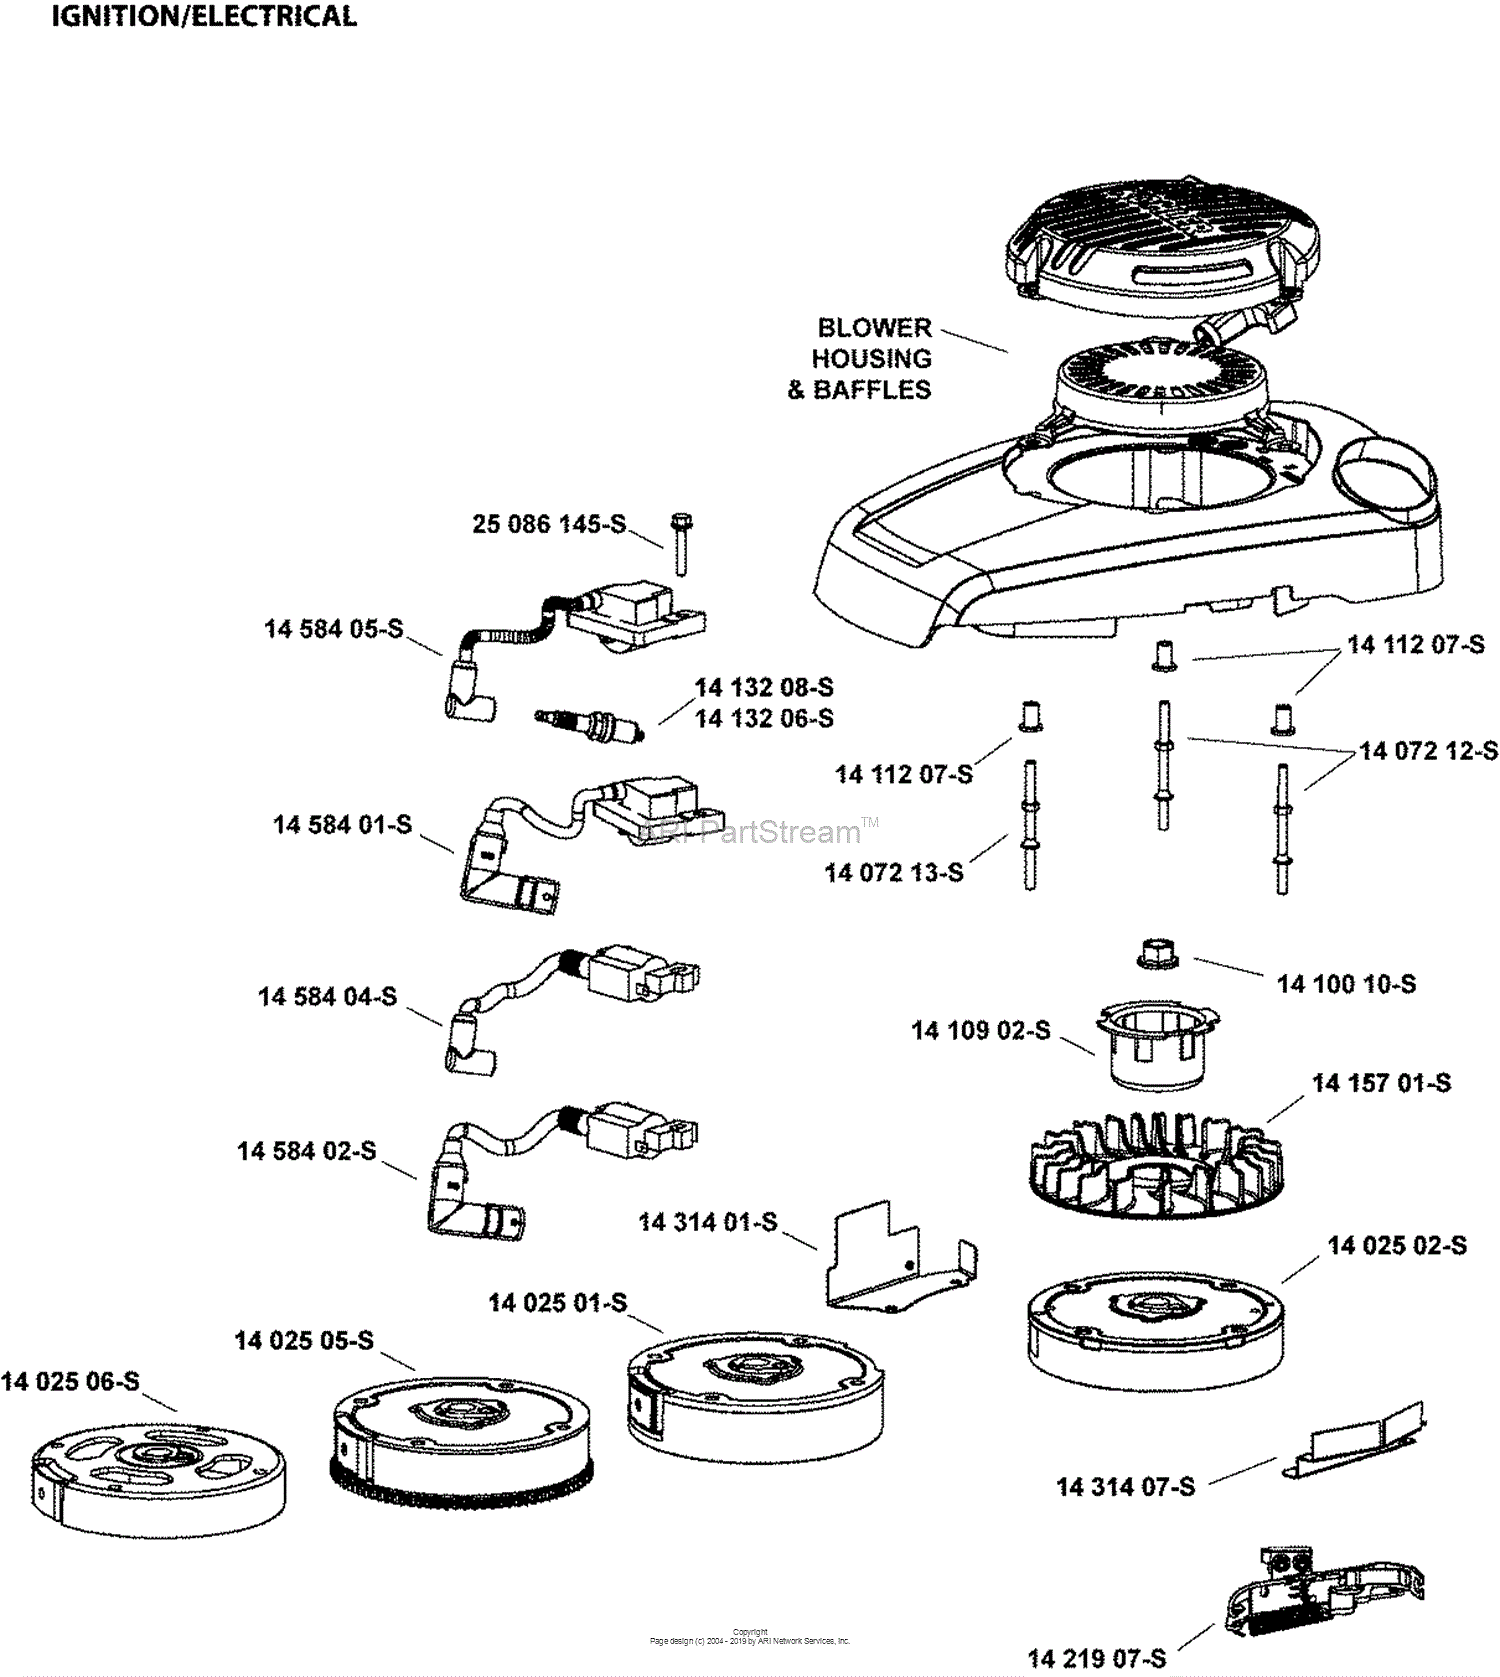 Kohler A112.18.1 Parts Diagram Kohler Xt675 Carburetor Diagram